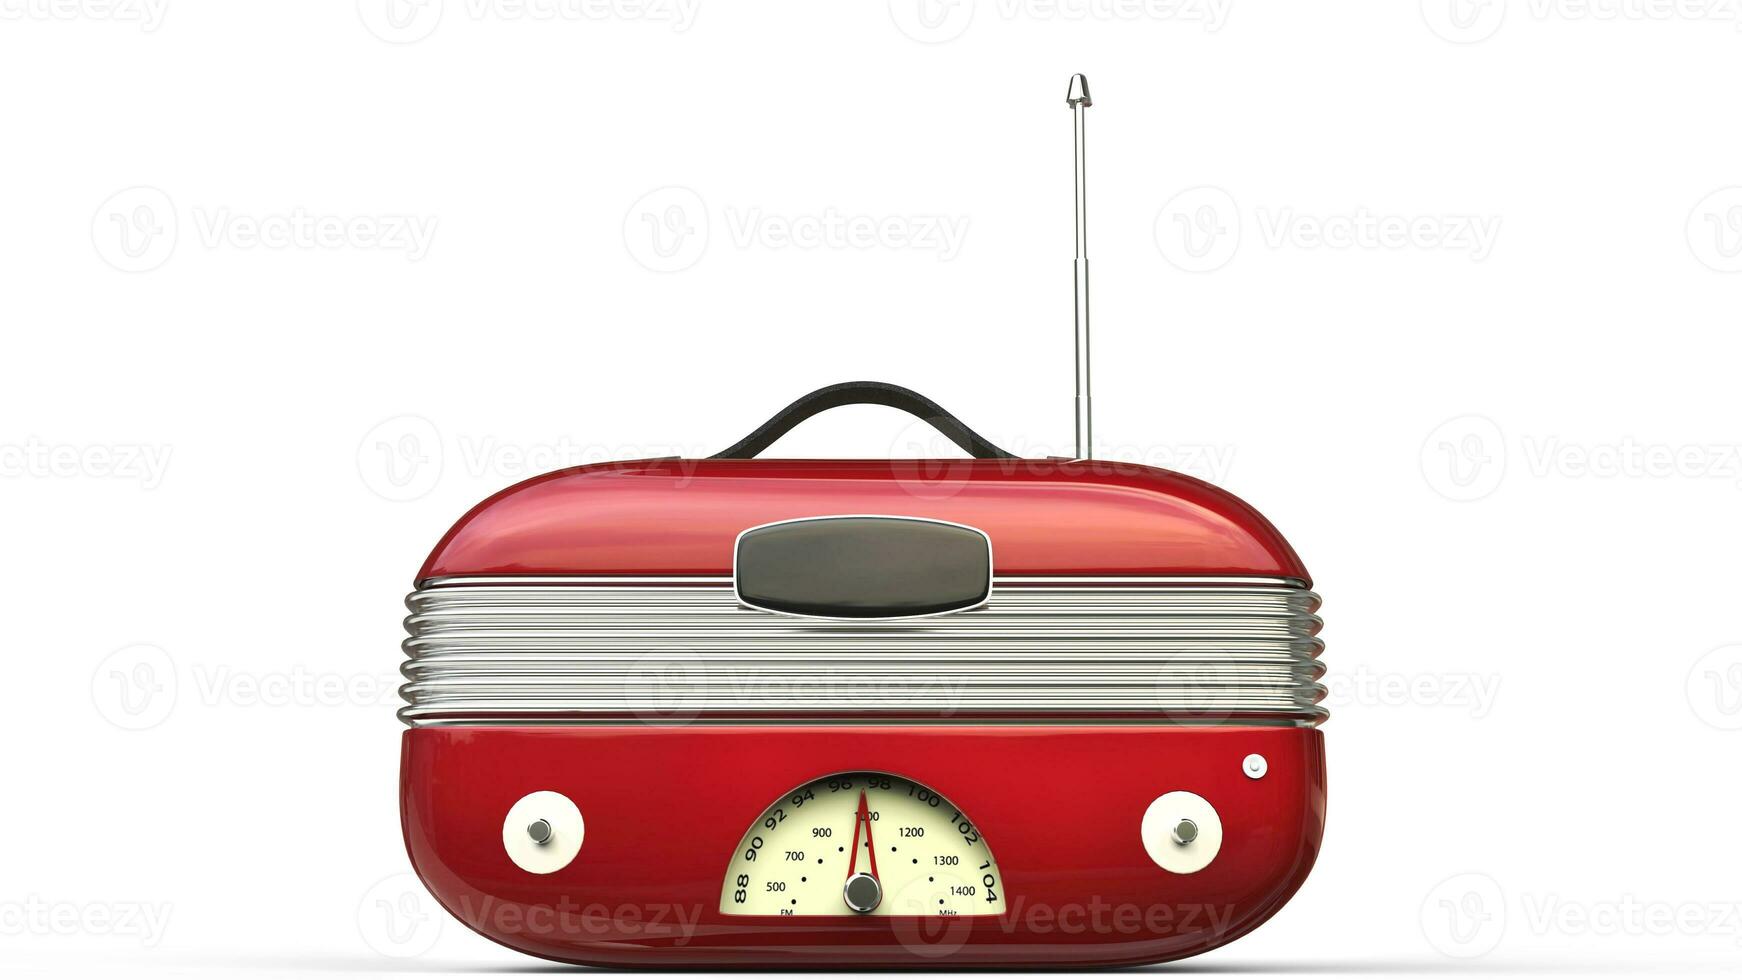 Metallic red cool vintage radio - front view photo